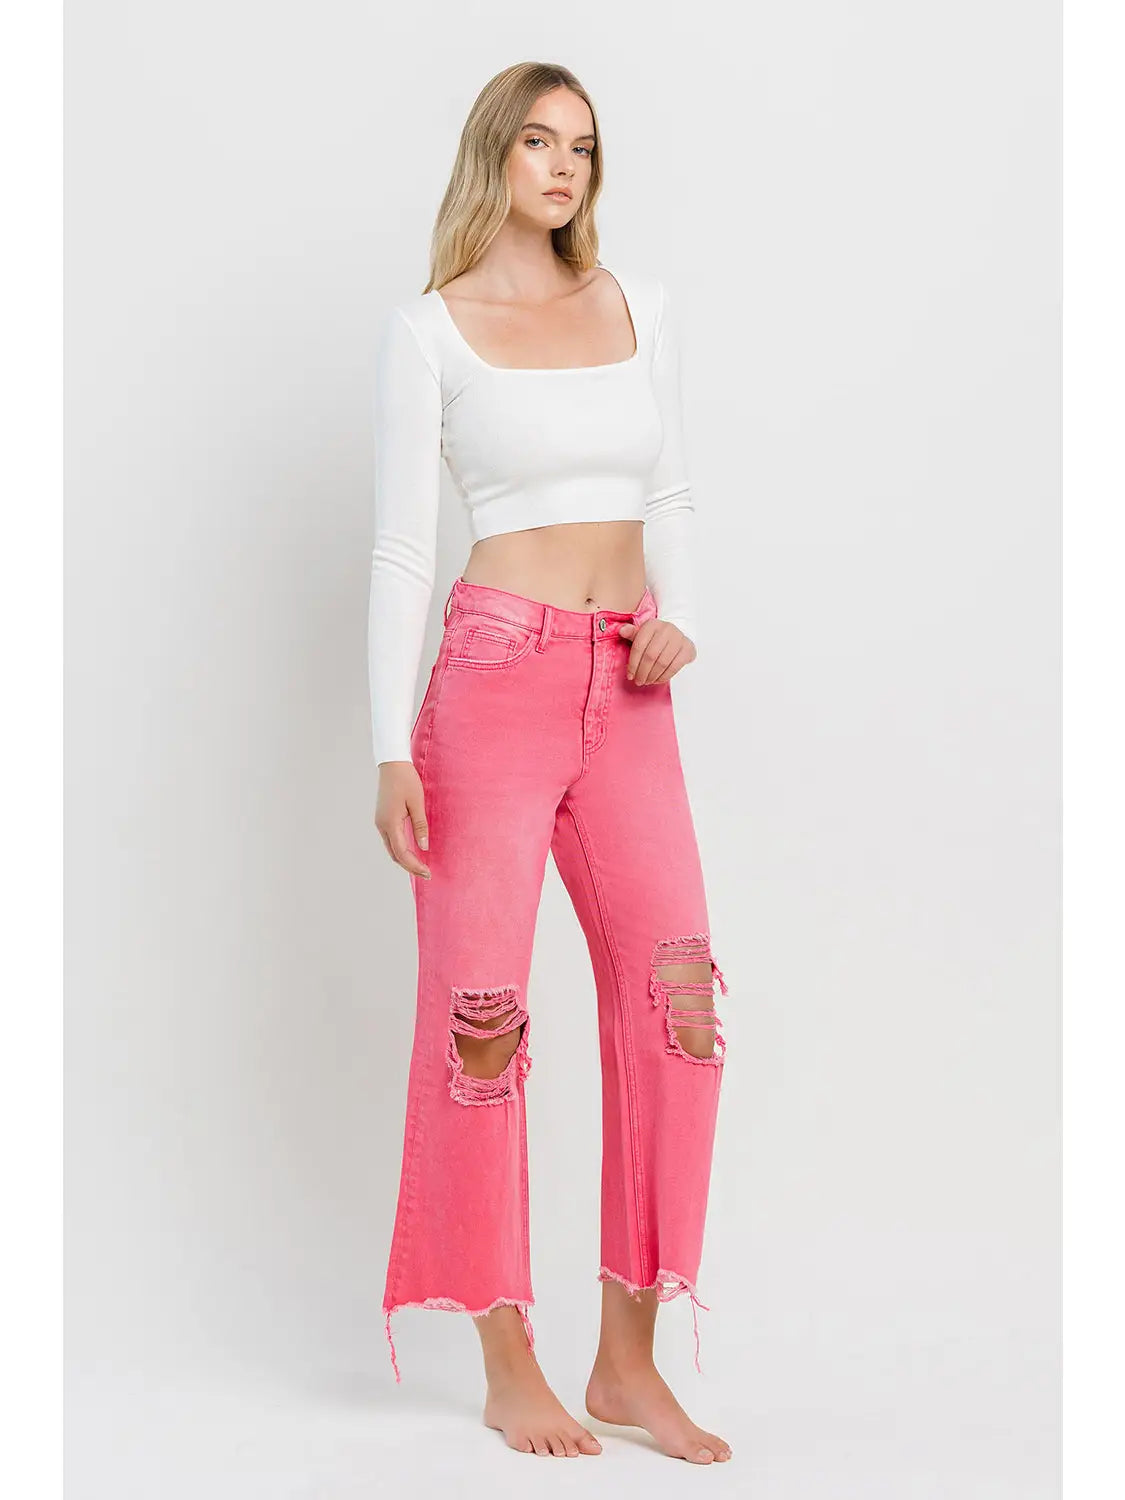 90s Vintage Super High Rise Crop Flare Jeans in Hot Pink